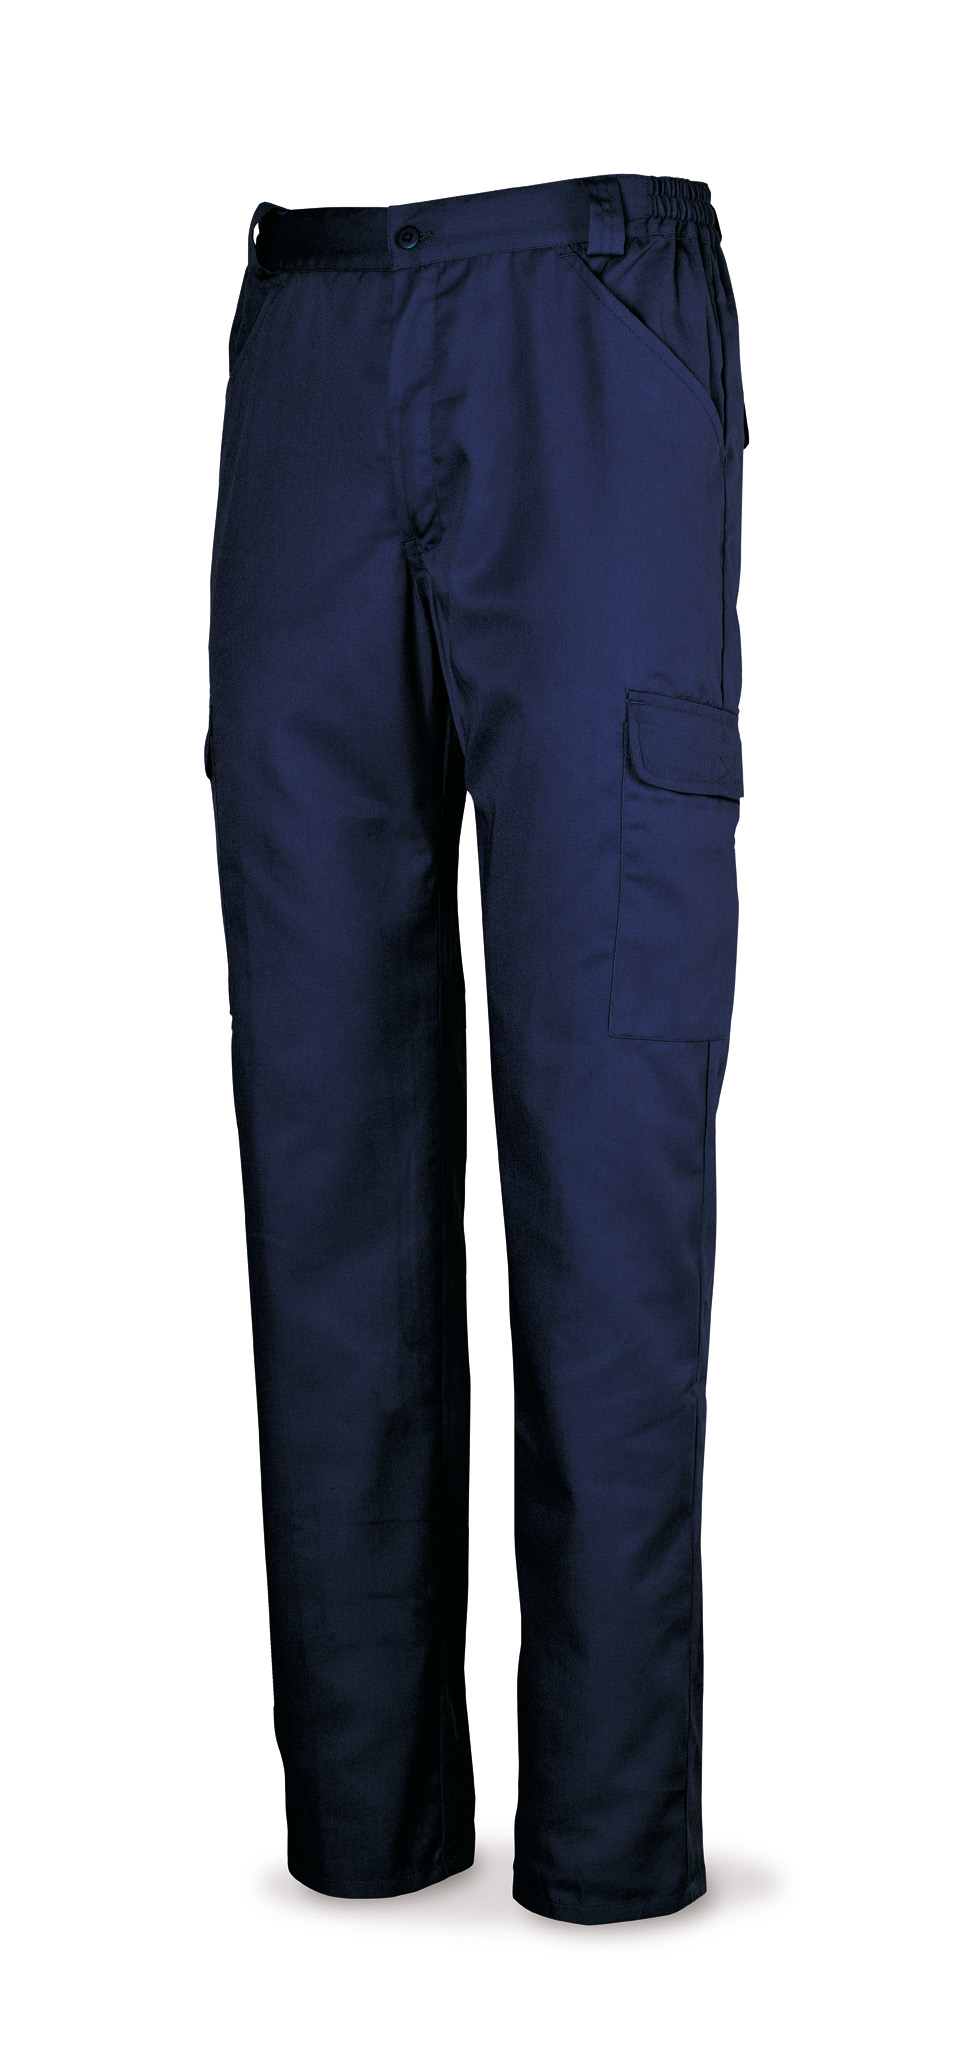 388-PAM Workwear Basic Line Tergal. Navy blue.